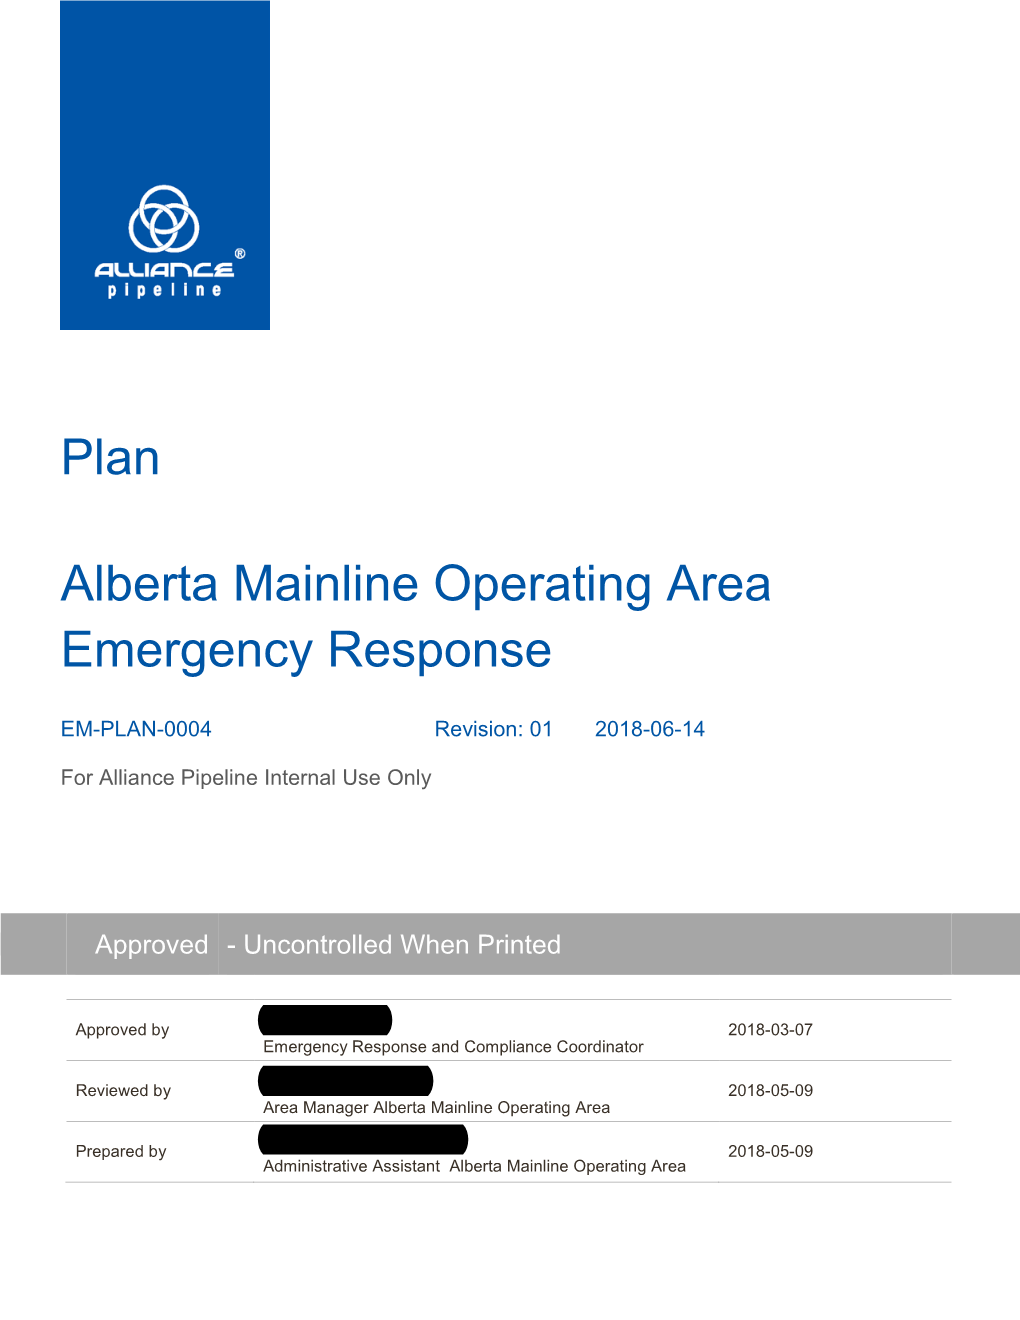 Alberta Mainline Operating Area Emergency Response